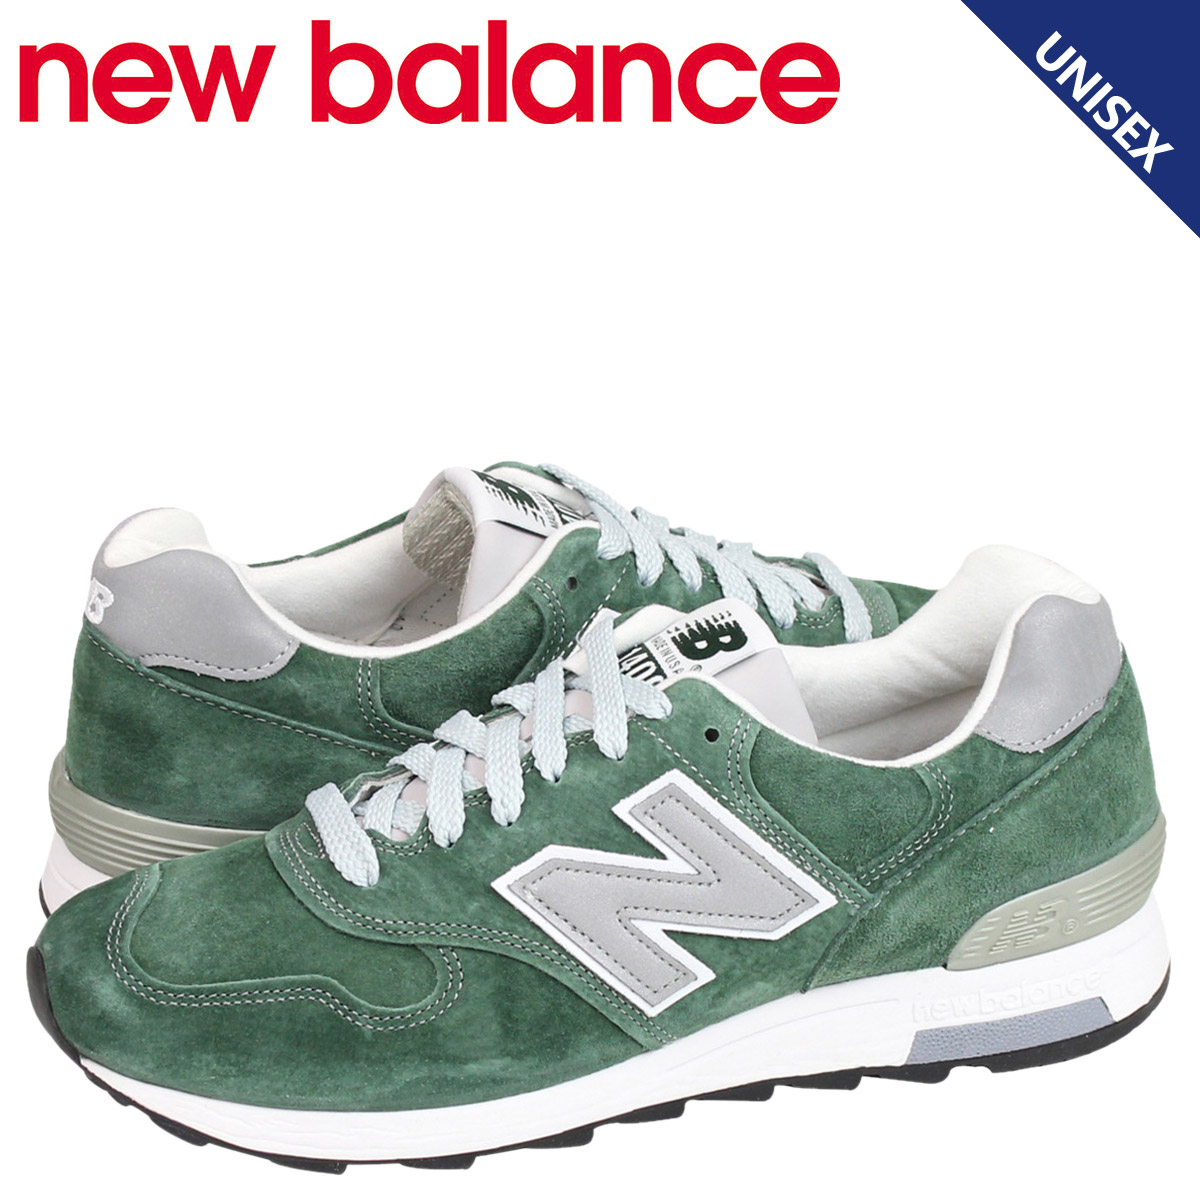 new balance 1400 online